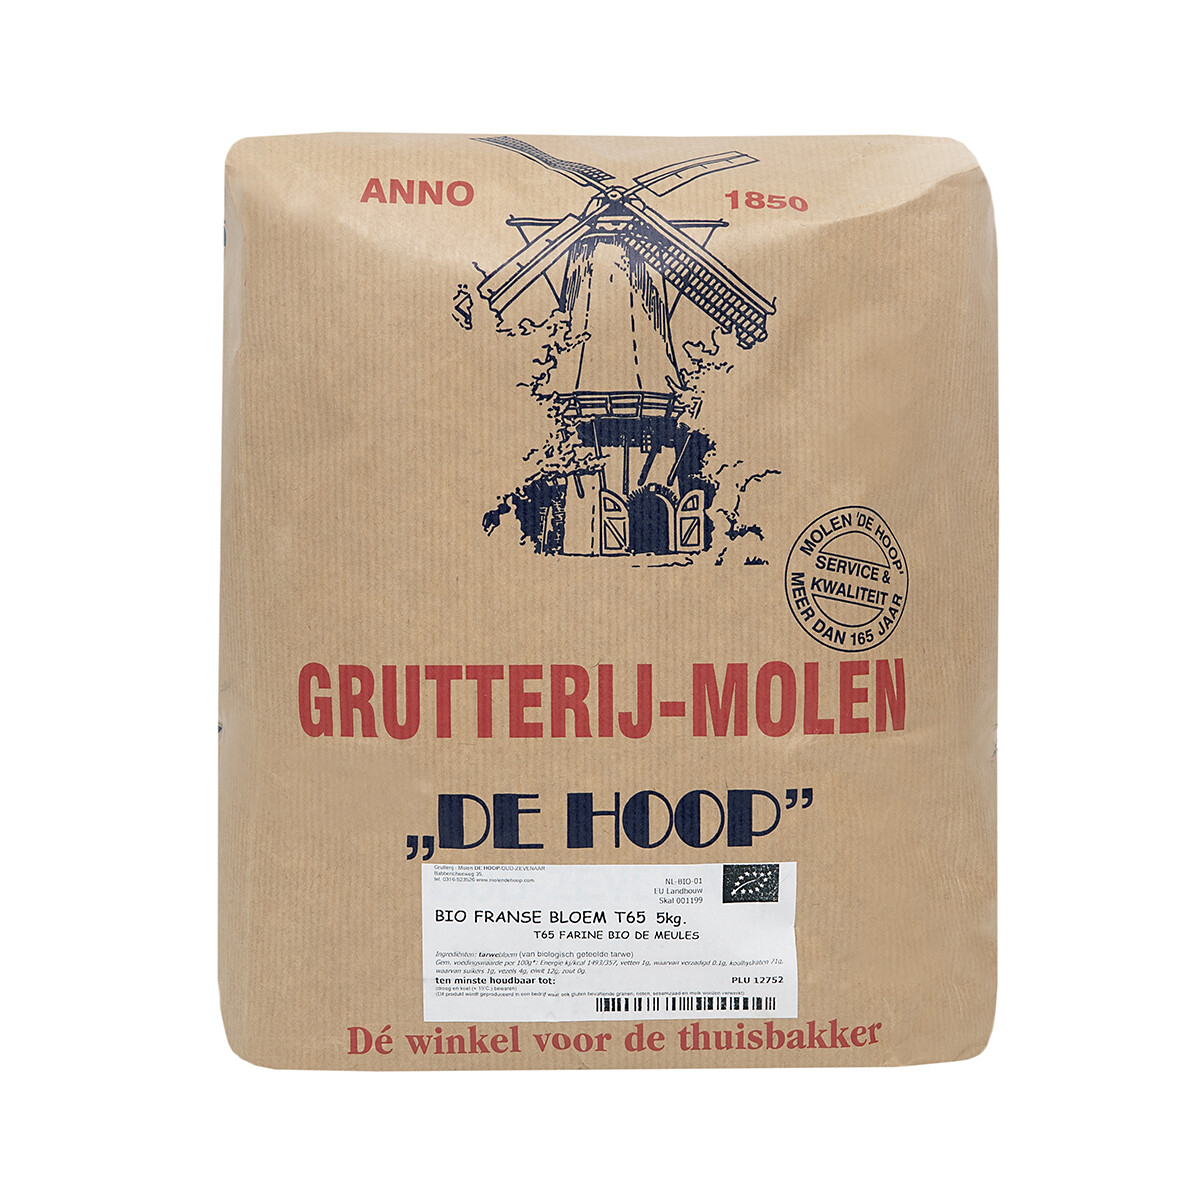 Molen de Hoop EKO French Wheat Flour T65 5kg (Farine)